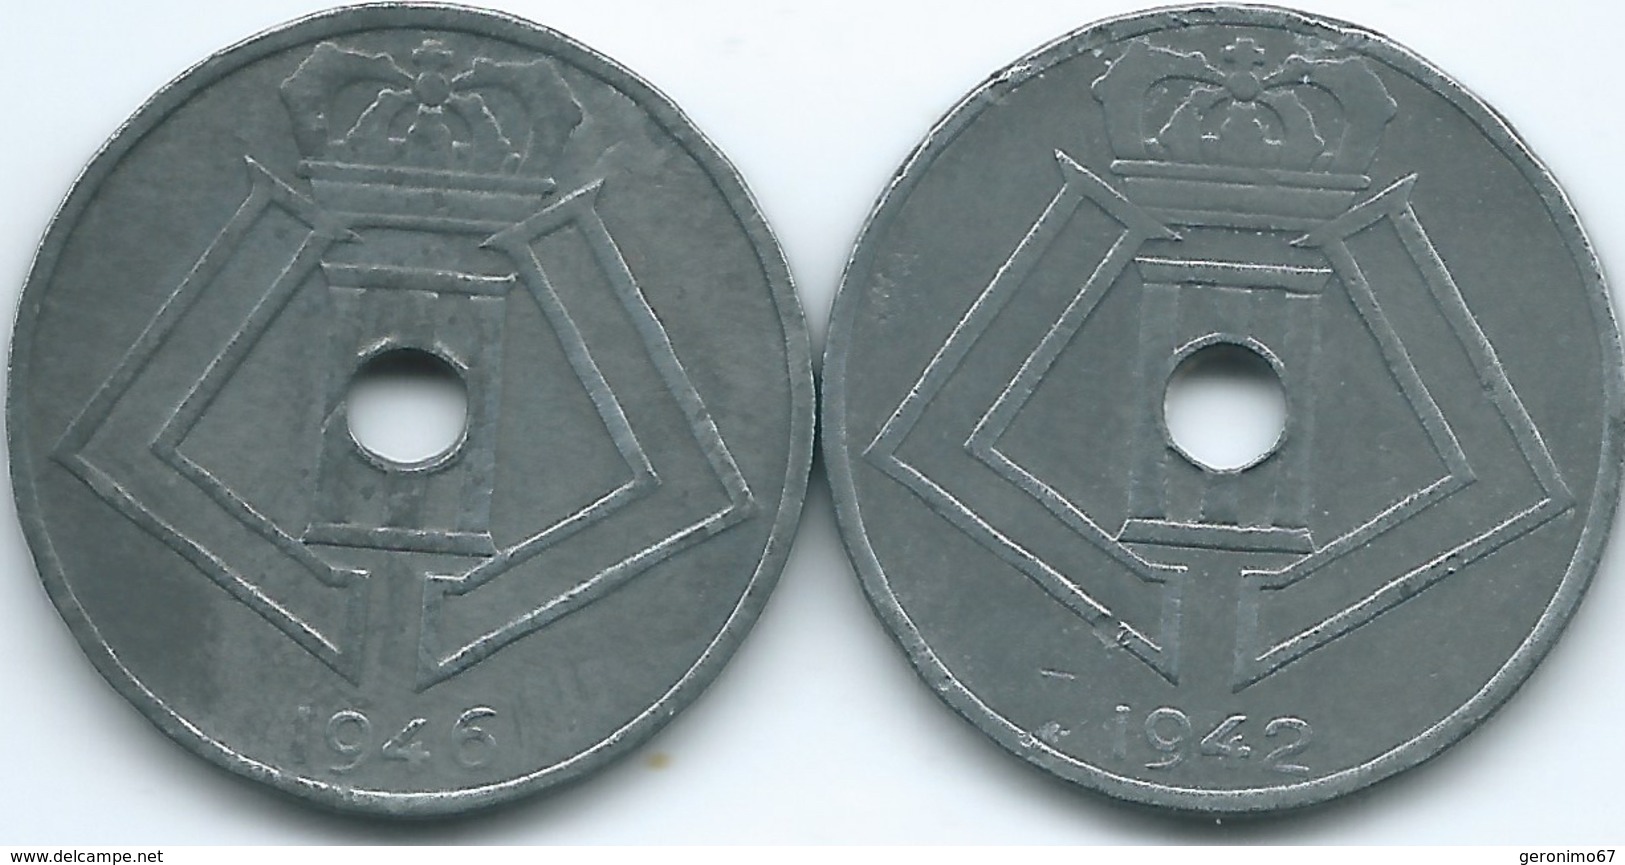 Belgium - Leopold III - Regency - 25 Centimes - 1946 - KM131 (Dutch) & 1942 - KM132 (French) - 10 Cent & 25 Cent